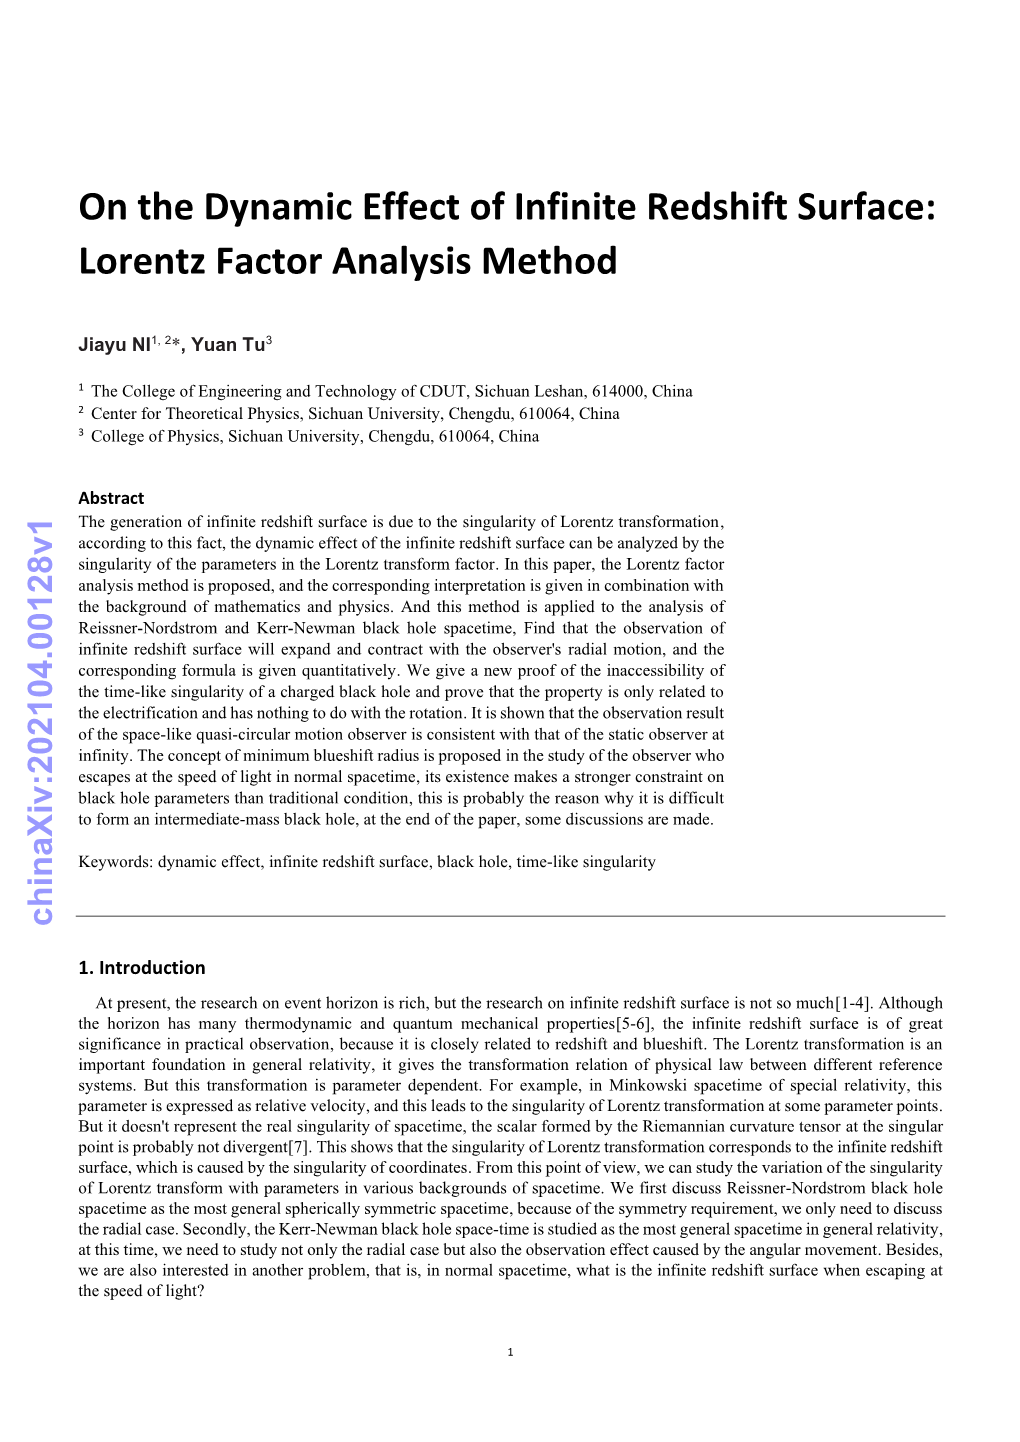 On the Dynamic Effect of Infinite Redshift Surface: Lorentz Factor Analysis Method